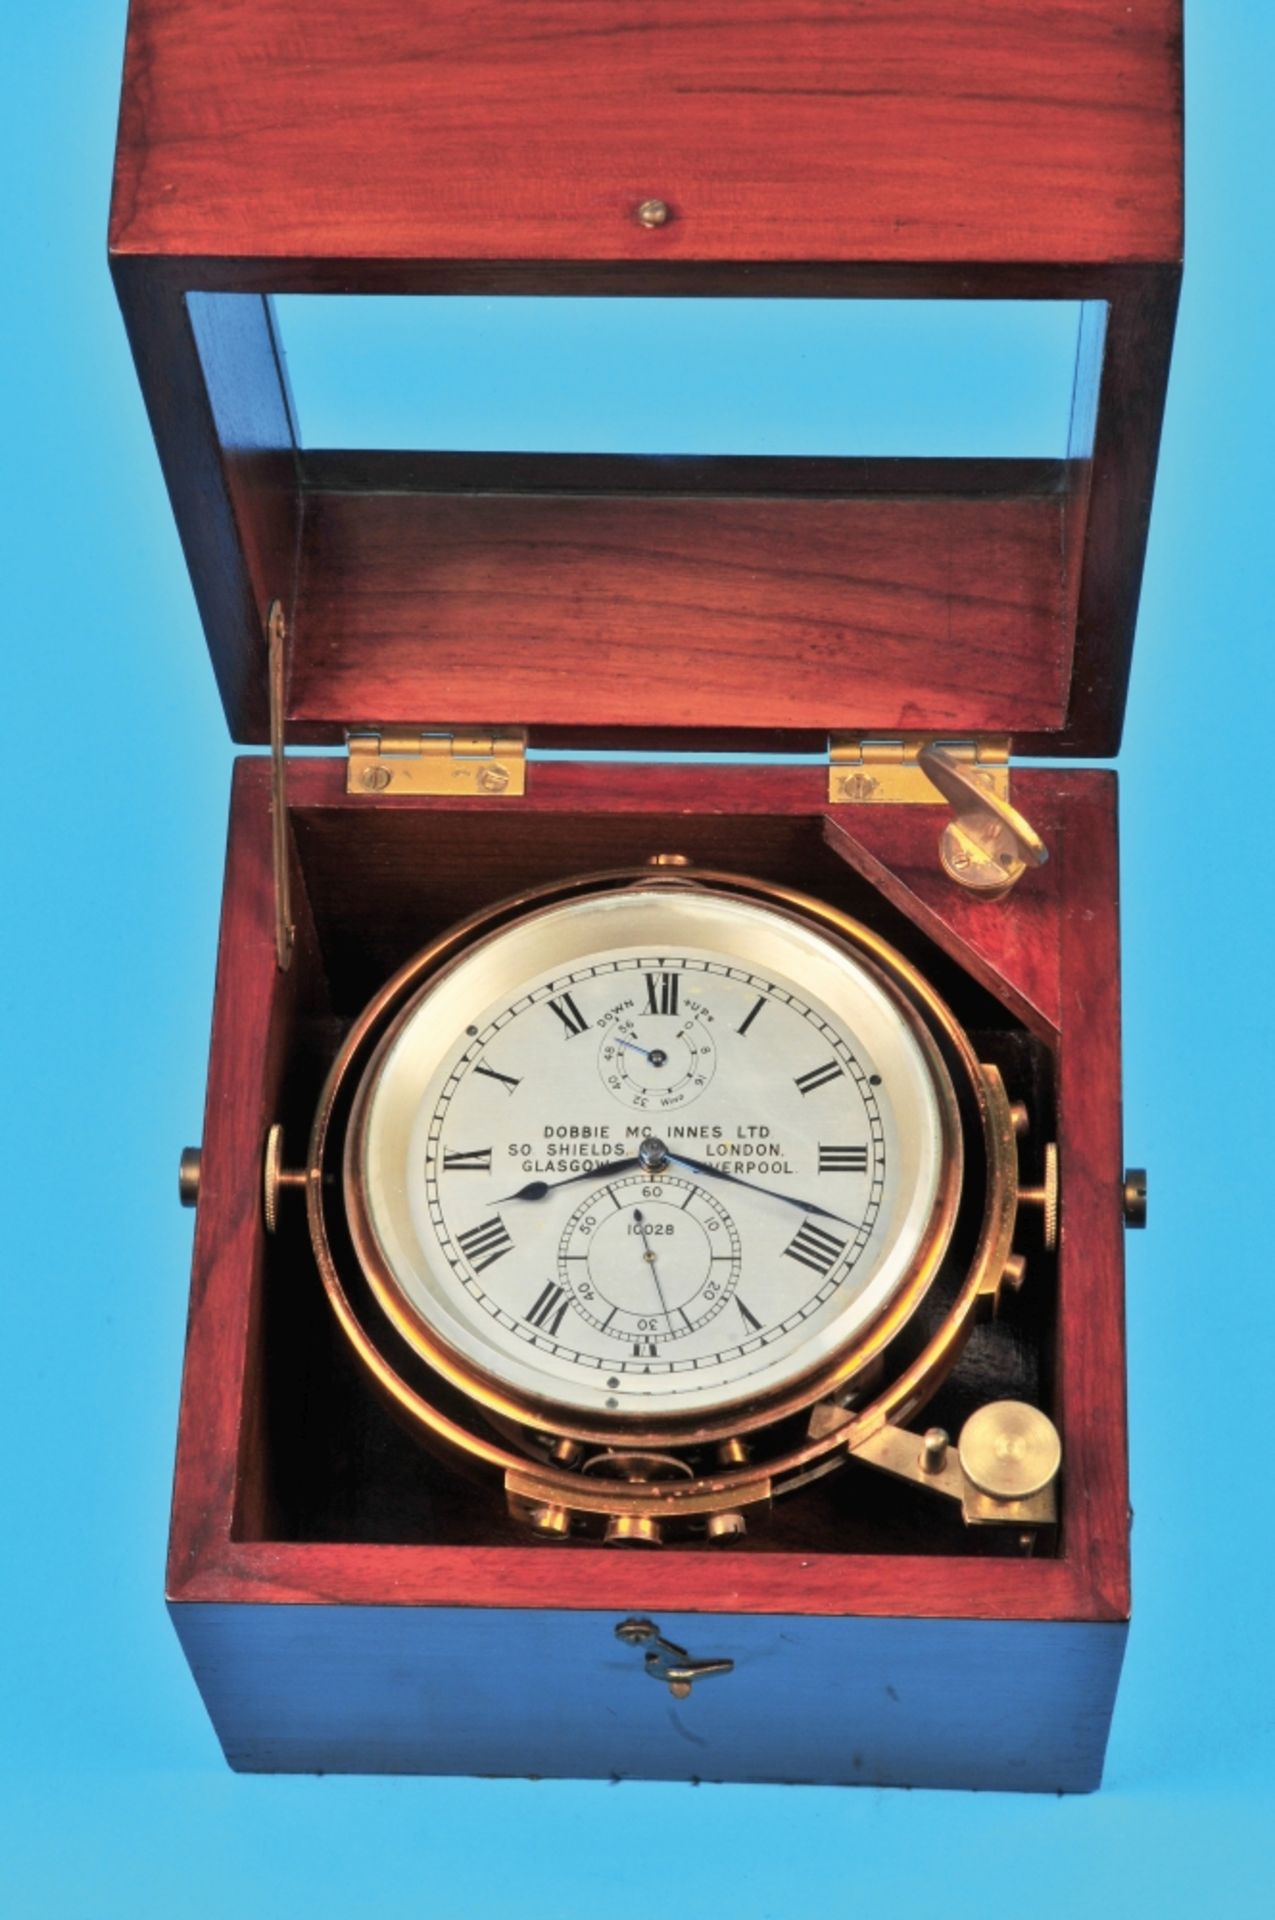 Marine-Chronometer Dobbie Mc Innes Ltd, Nr. 10028, South Shields, London, Glasgow, Liverpool,